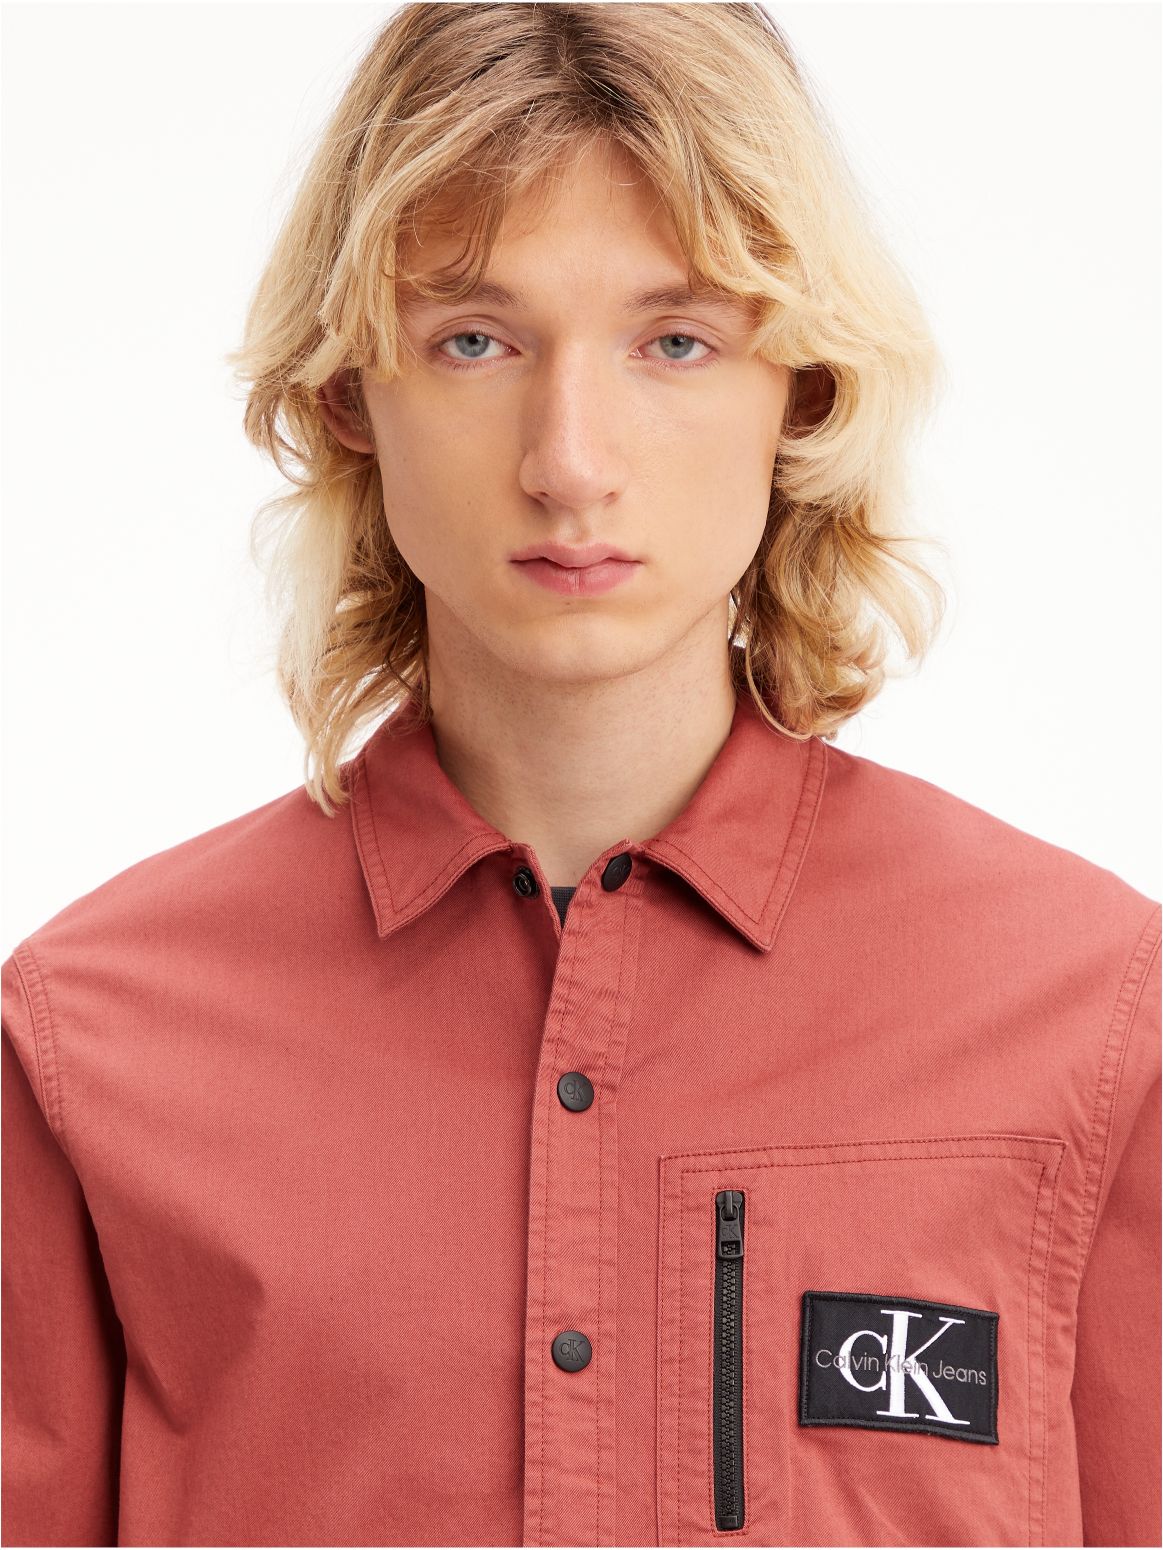 men shirt - jacket dstore - Calvin relaxed utility Klein Jeans - online